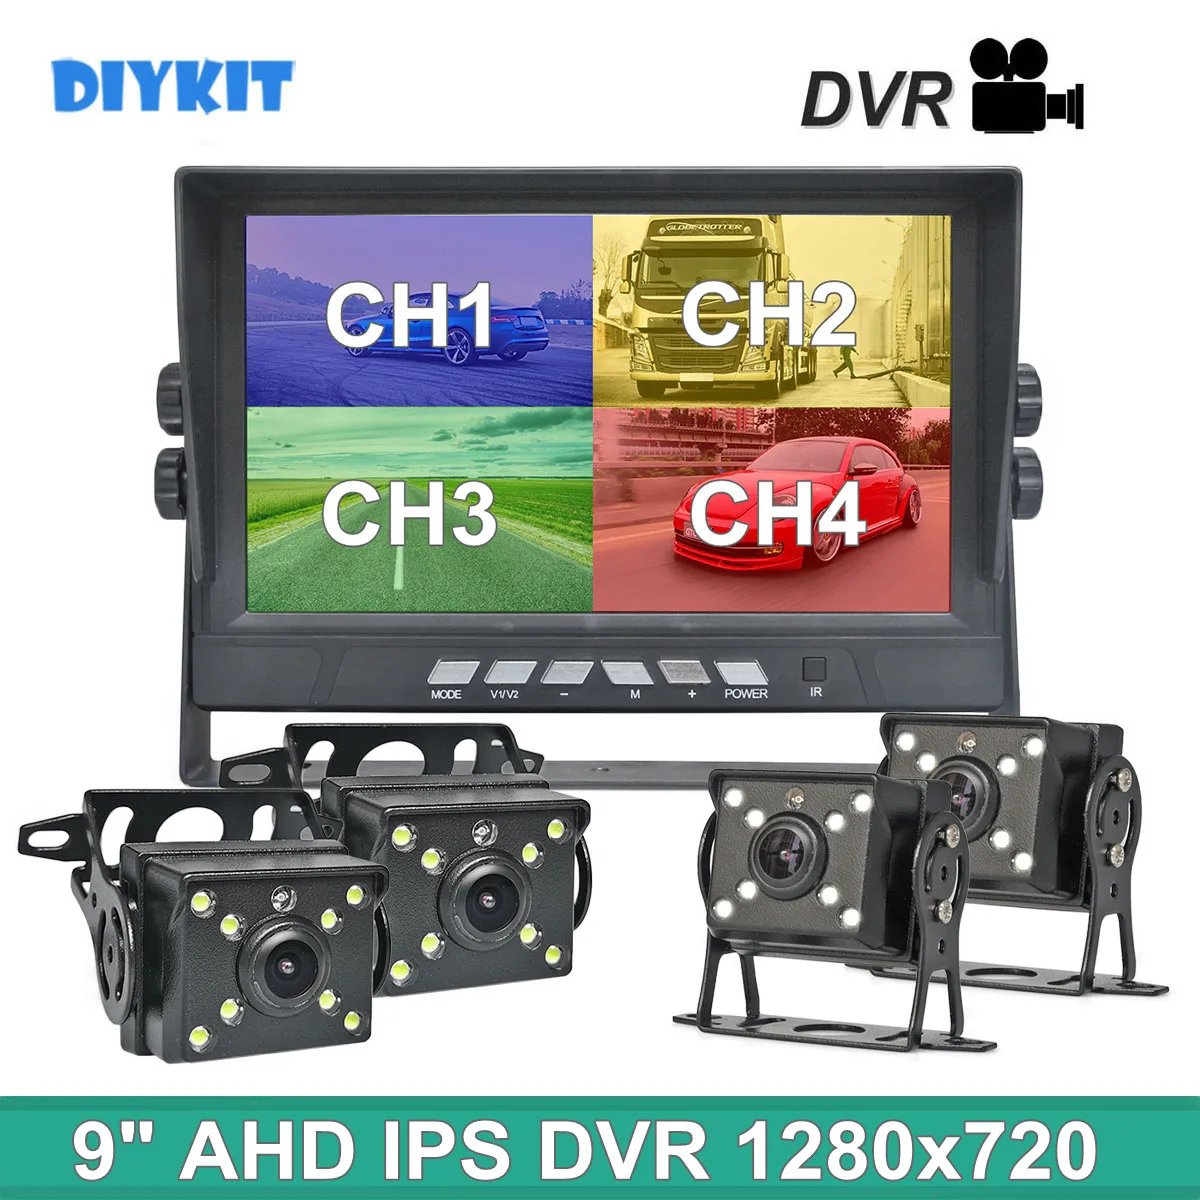 

DIYKIT 9inch AHD Split QUAD Car HD Monitor 1280*720 AHD Night Vision Rear View LED Camera Waterproof with Video Recording